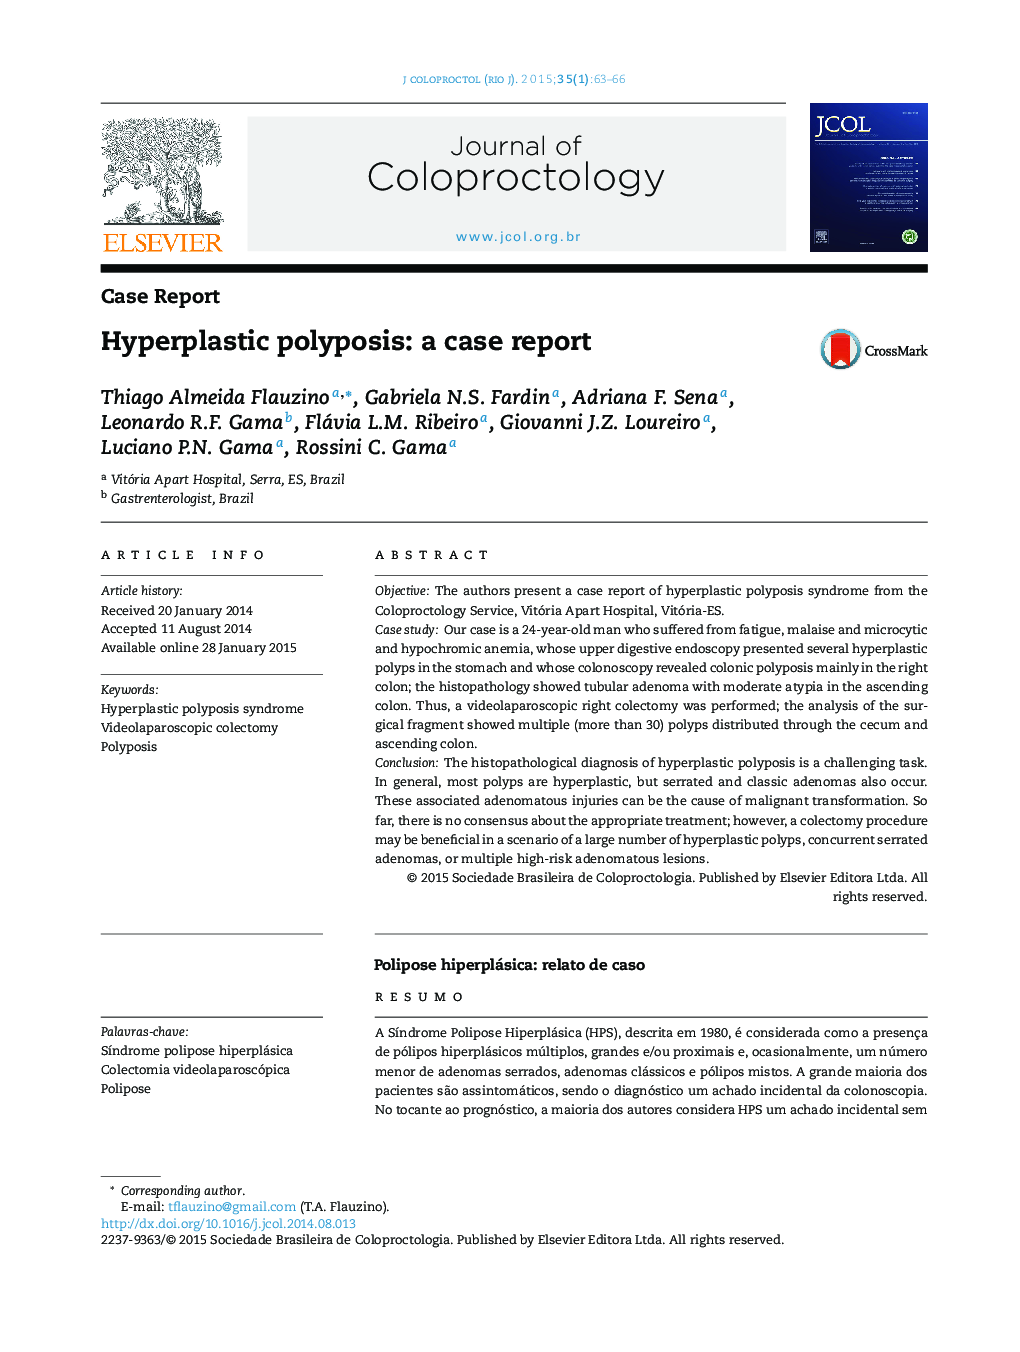 پلیپوز هیپرپلازی: گزارش مورد 